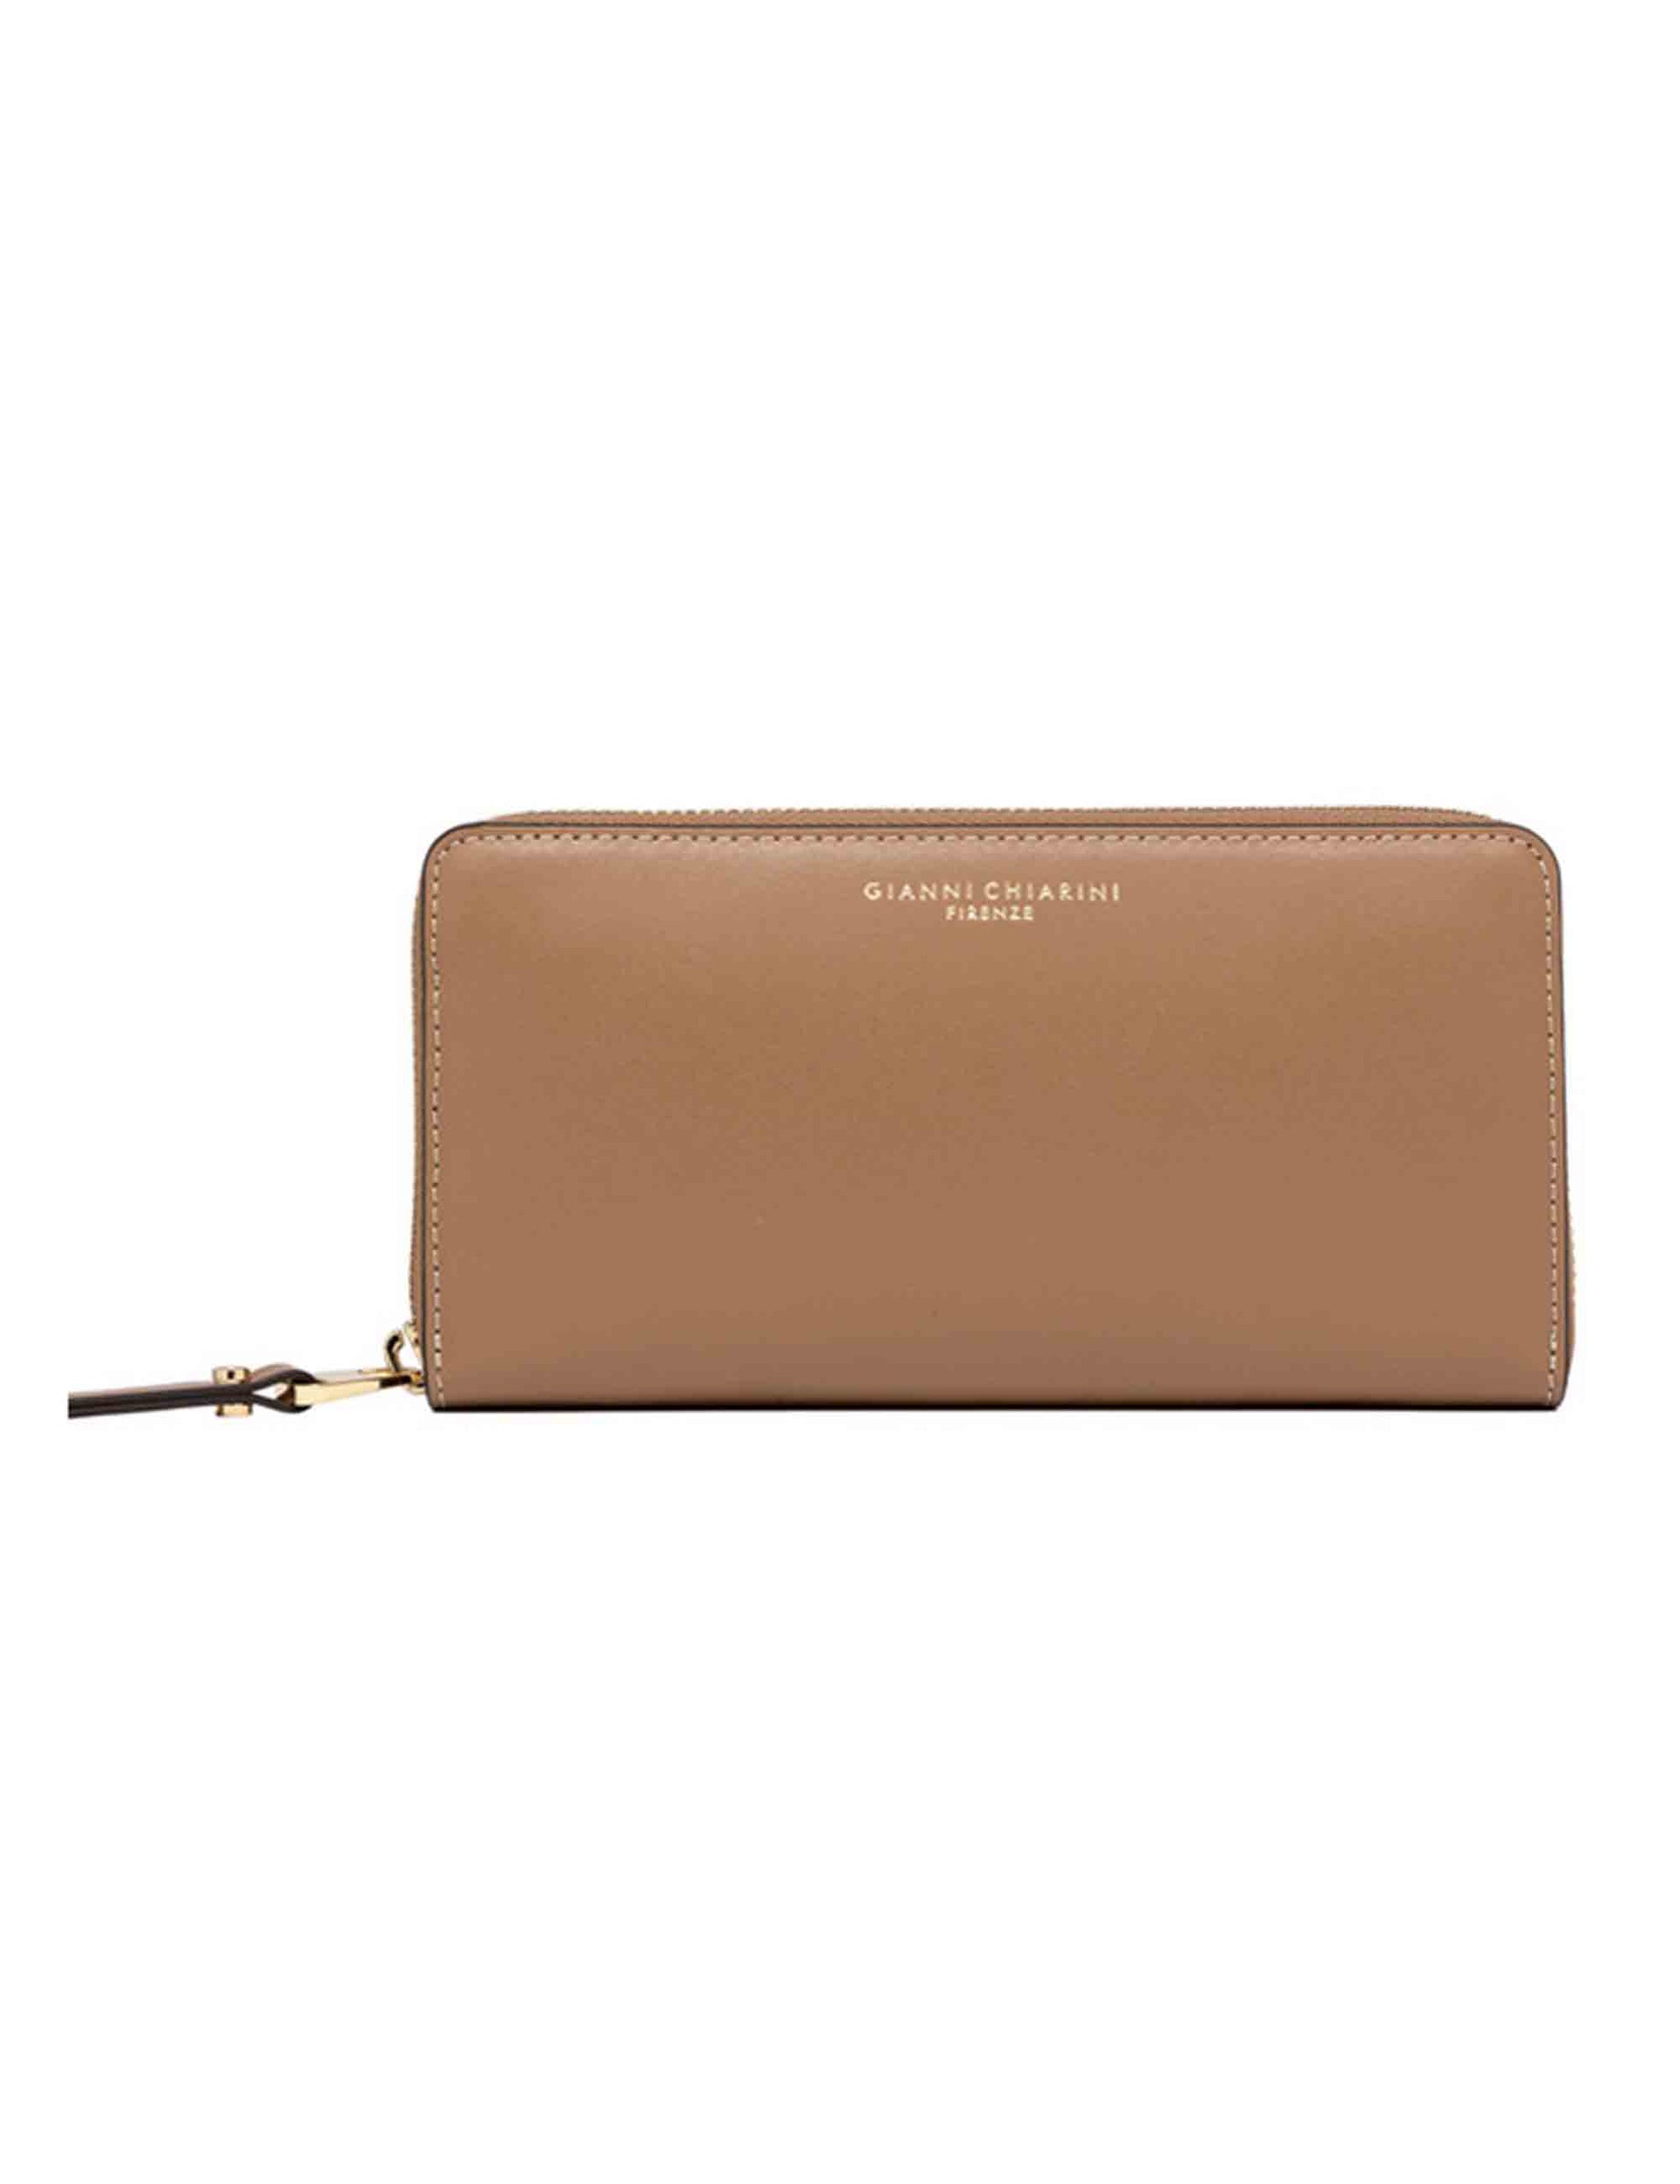 Women's wallet in tan leather with zip